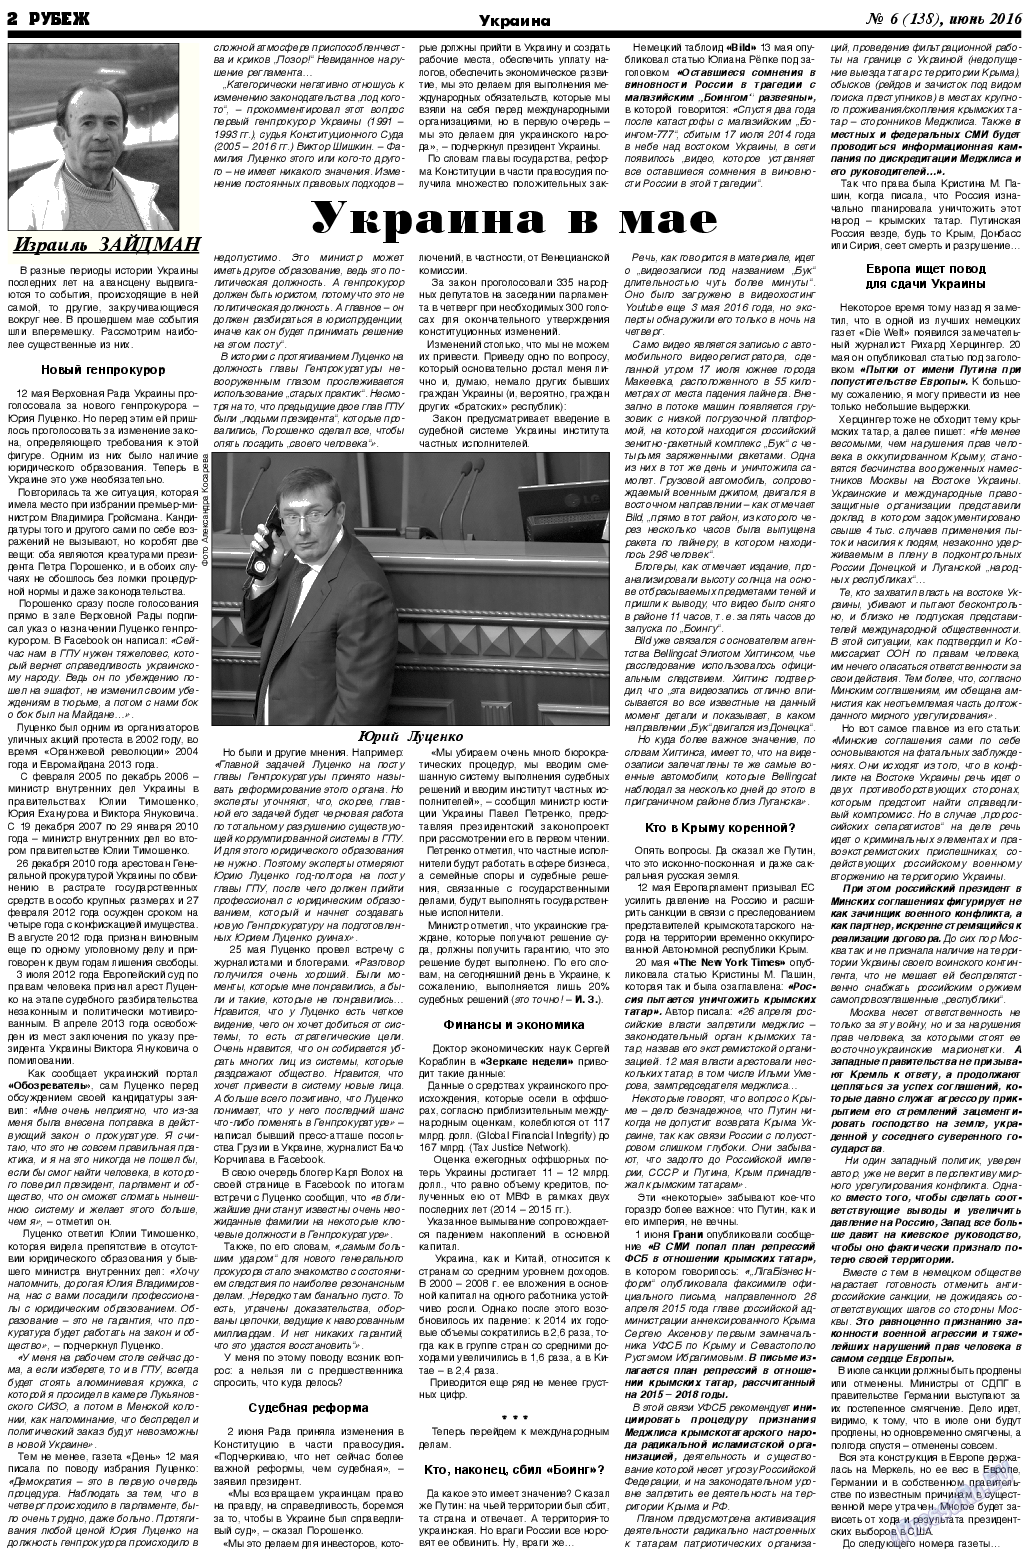 Рубеж, газета. 2016 №6 стр.2